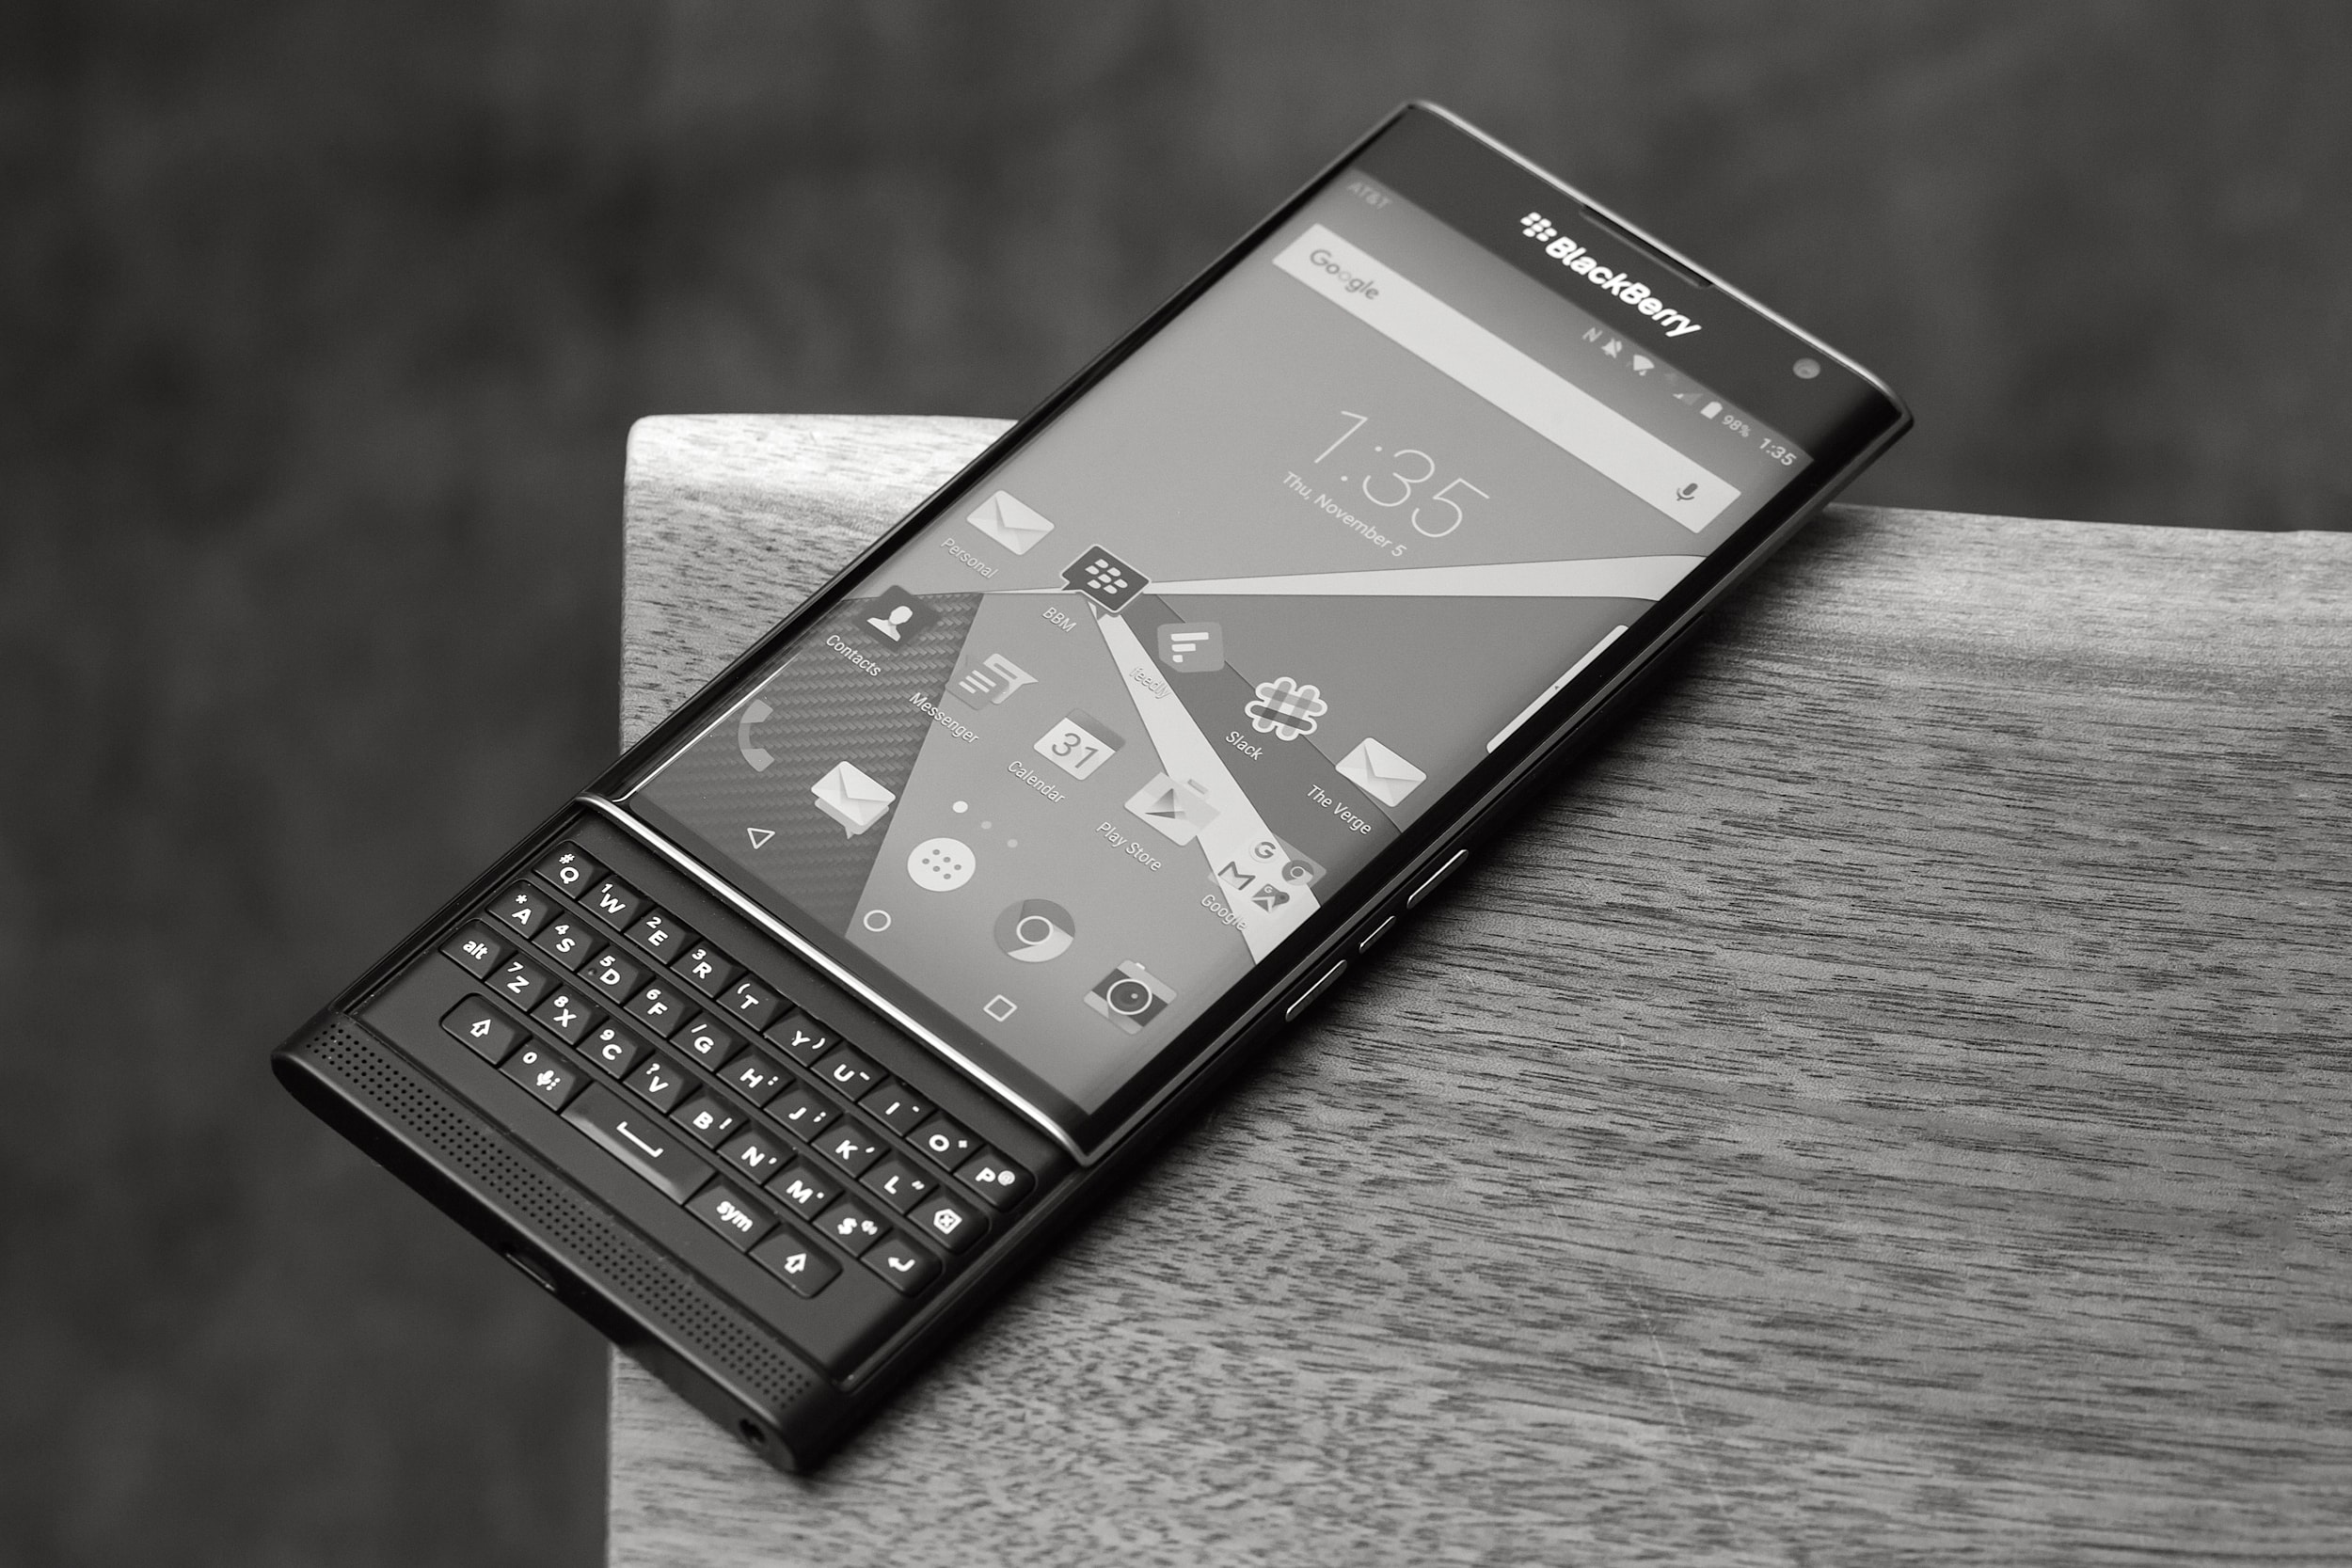 Blackberry Is Done Making Smartphones